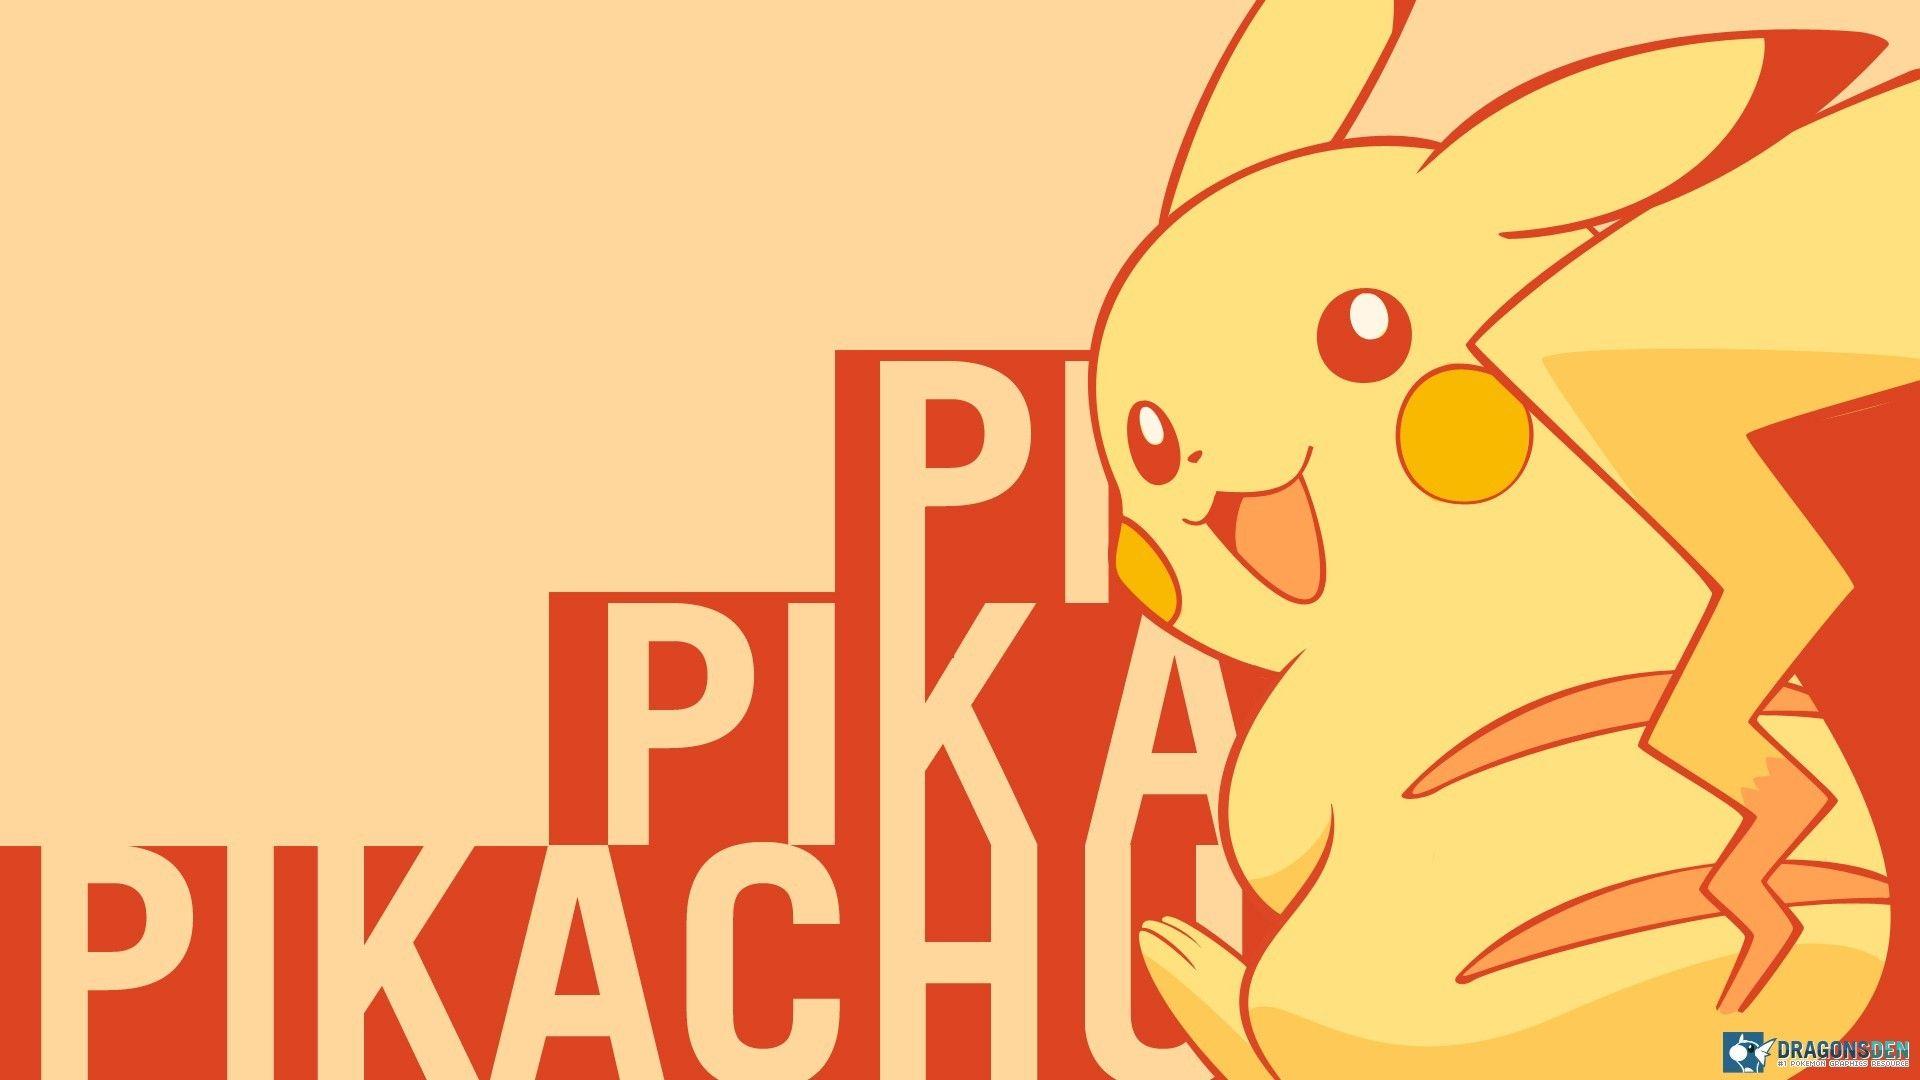 Free download Pikachu background